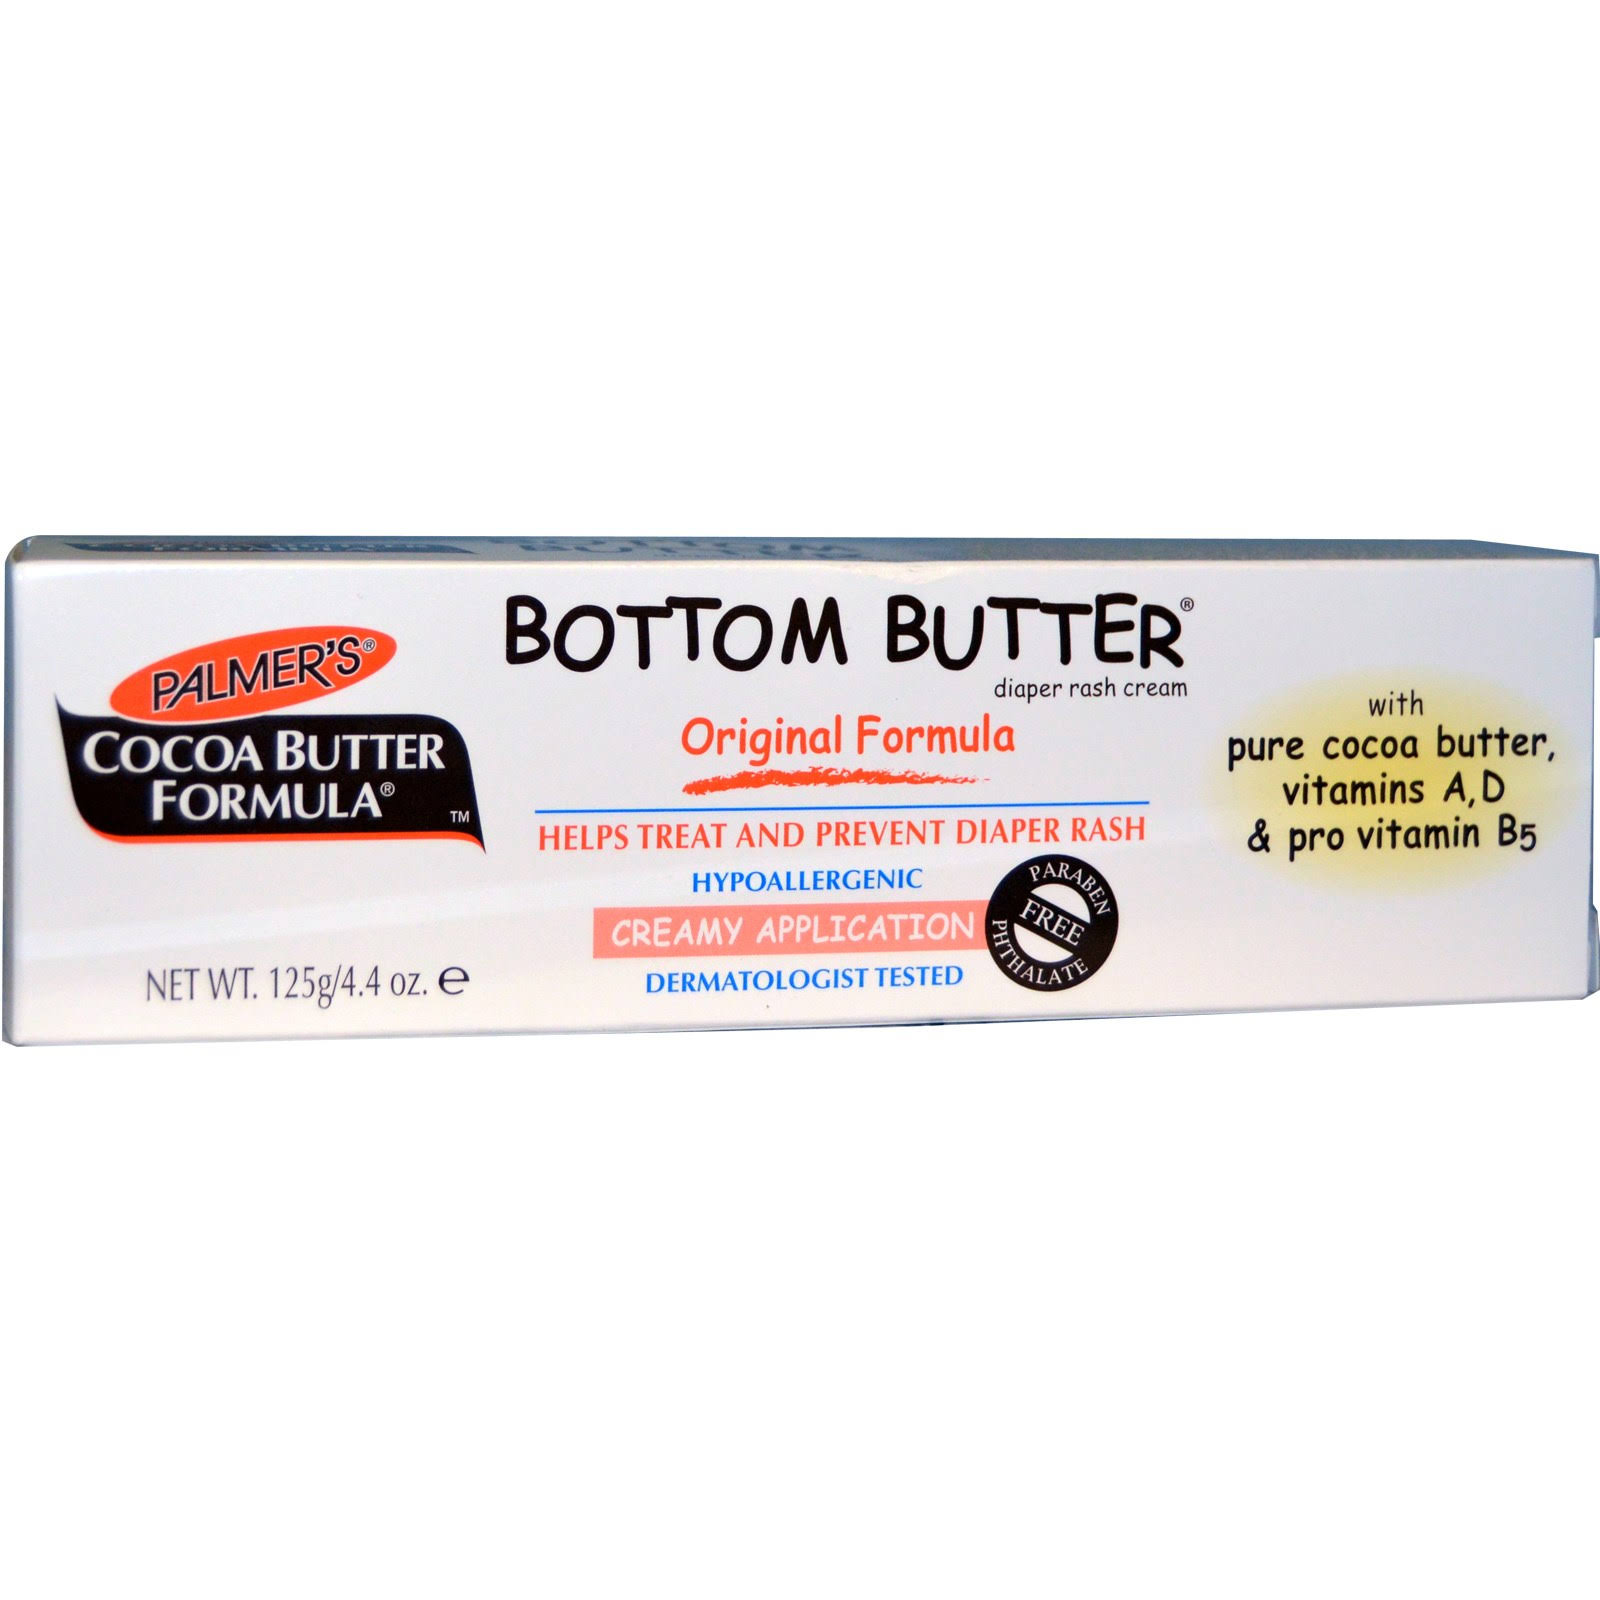 Palmers Cocoa Butter Formula Bottom Butter, Creamy Application - 4.4 oz